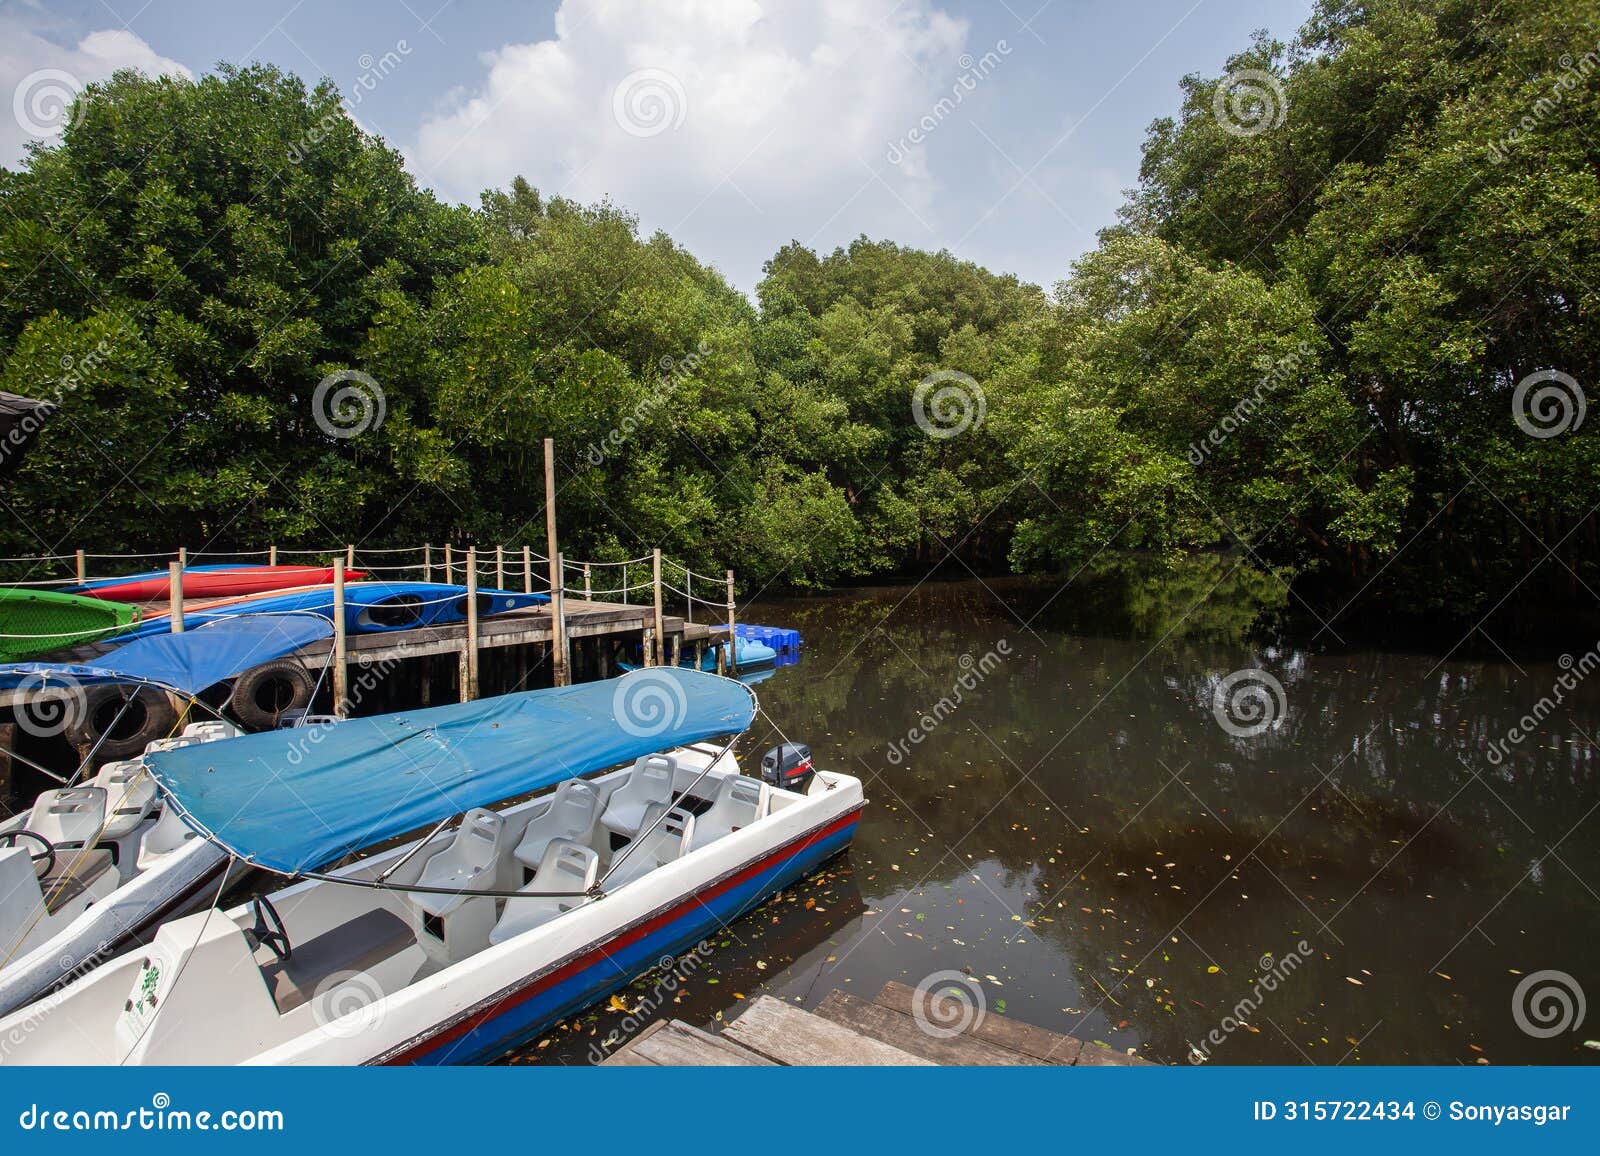 tourist boat in the mangrove nature tourism park area in muara angke, pantai indah kapuk, jakarta